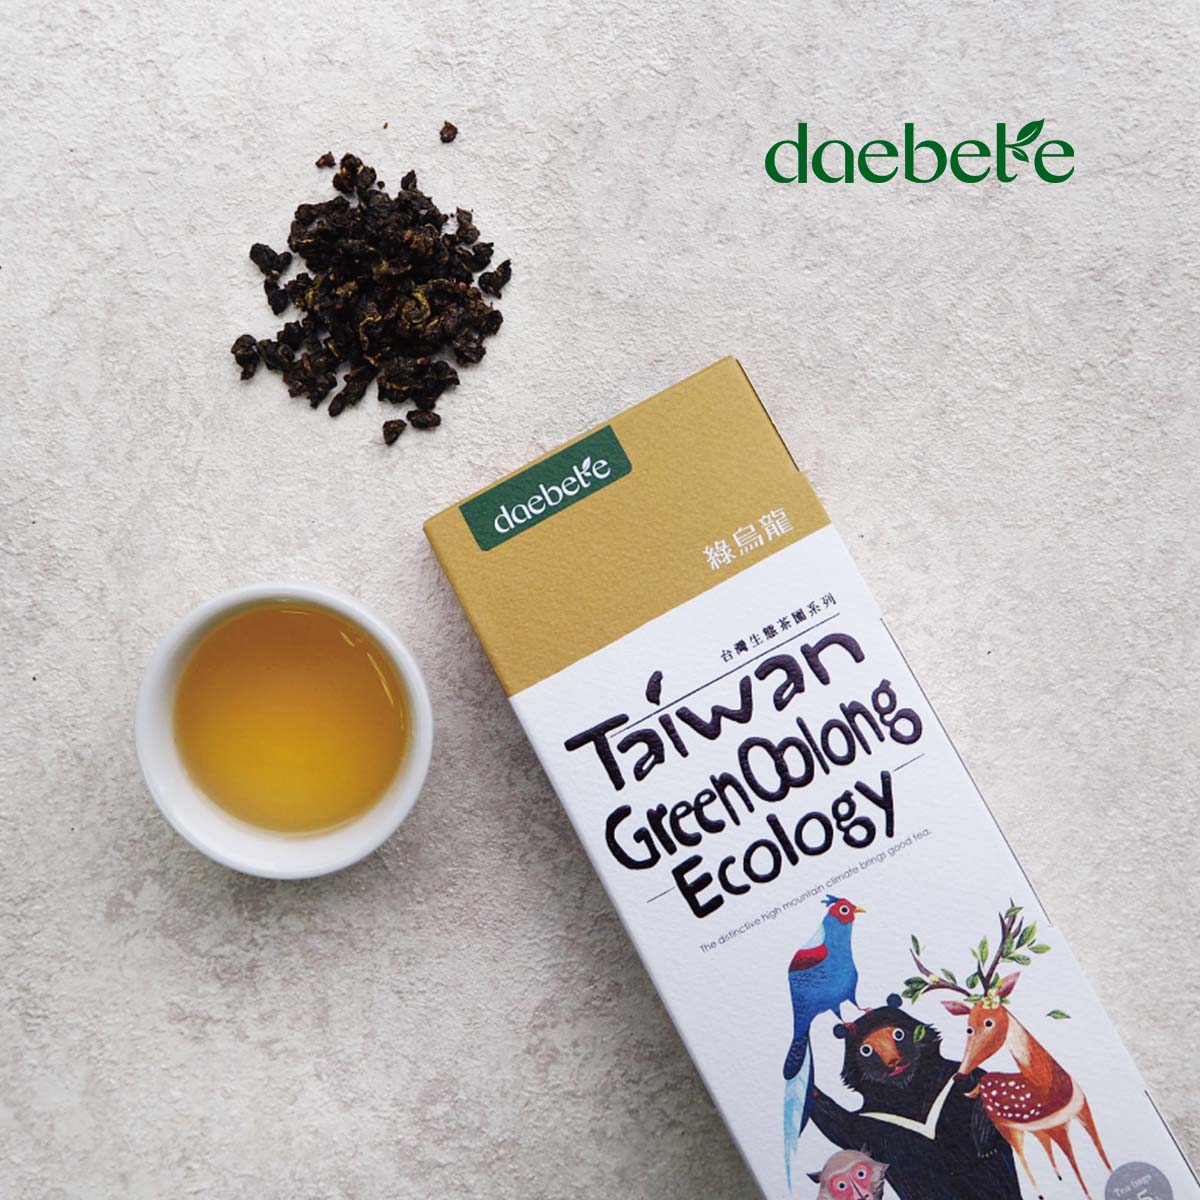 daebete 緑烏龍(Taiwan Green Tea Ecology)Tバッグ15袋入り（個包装）台湾茶